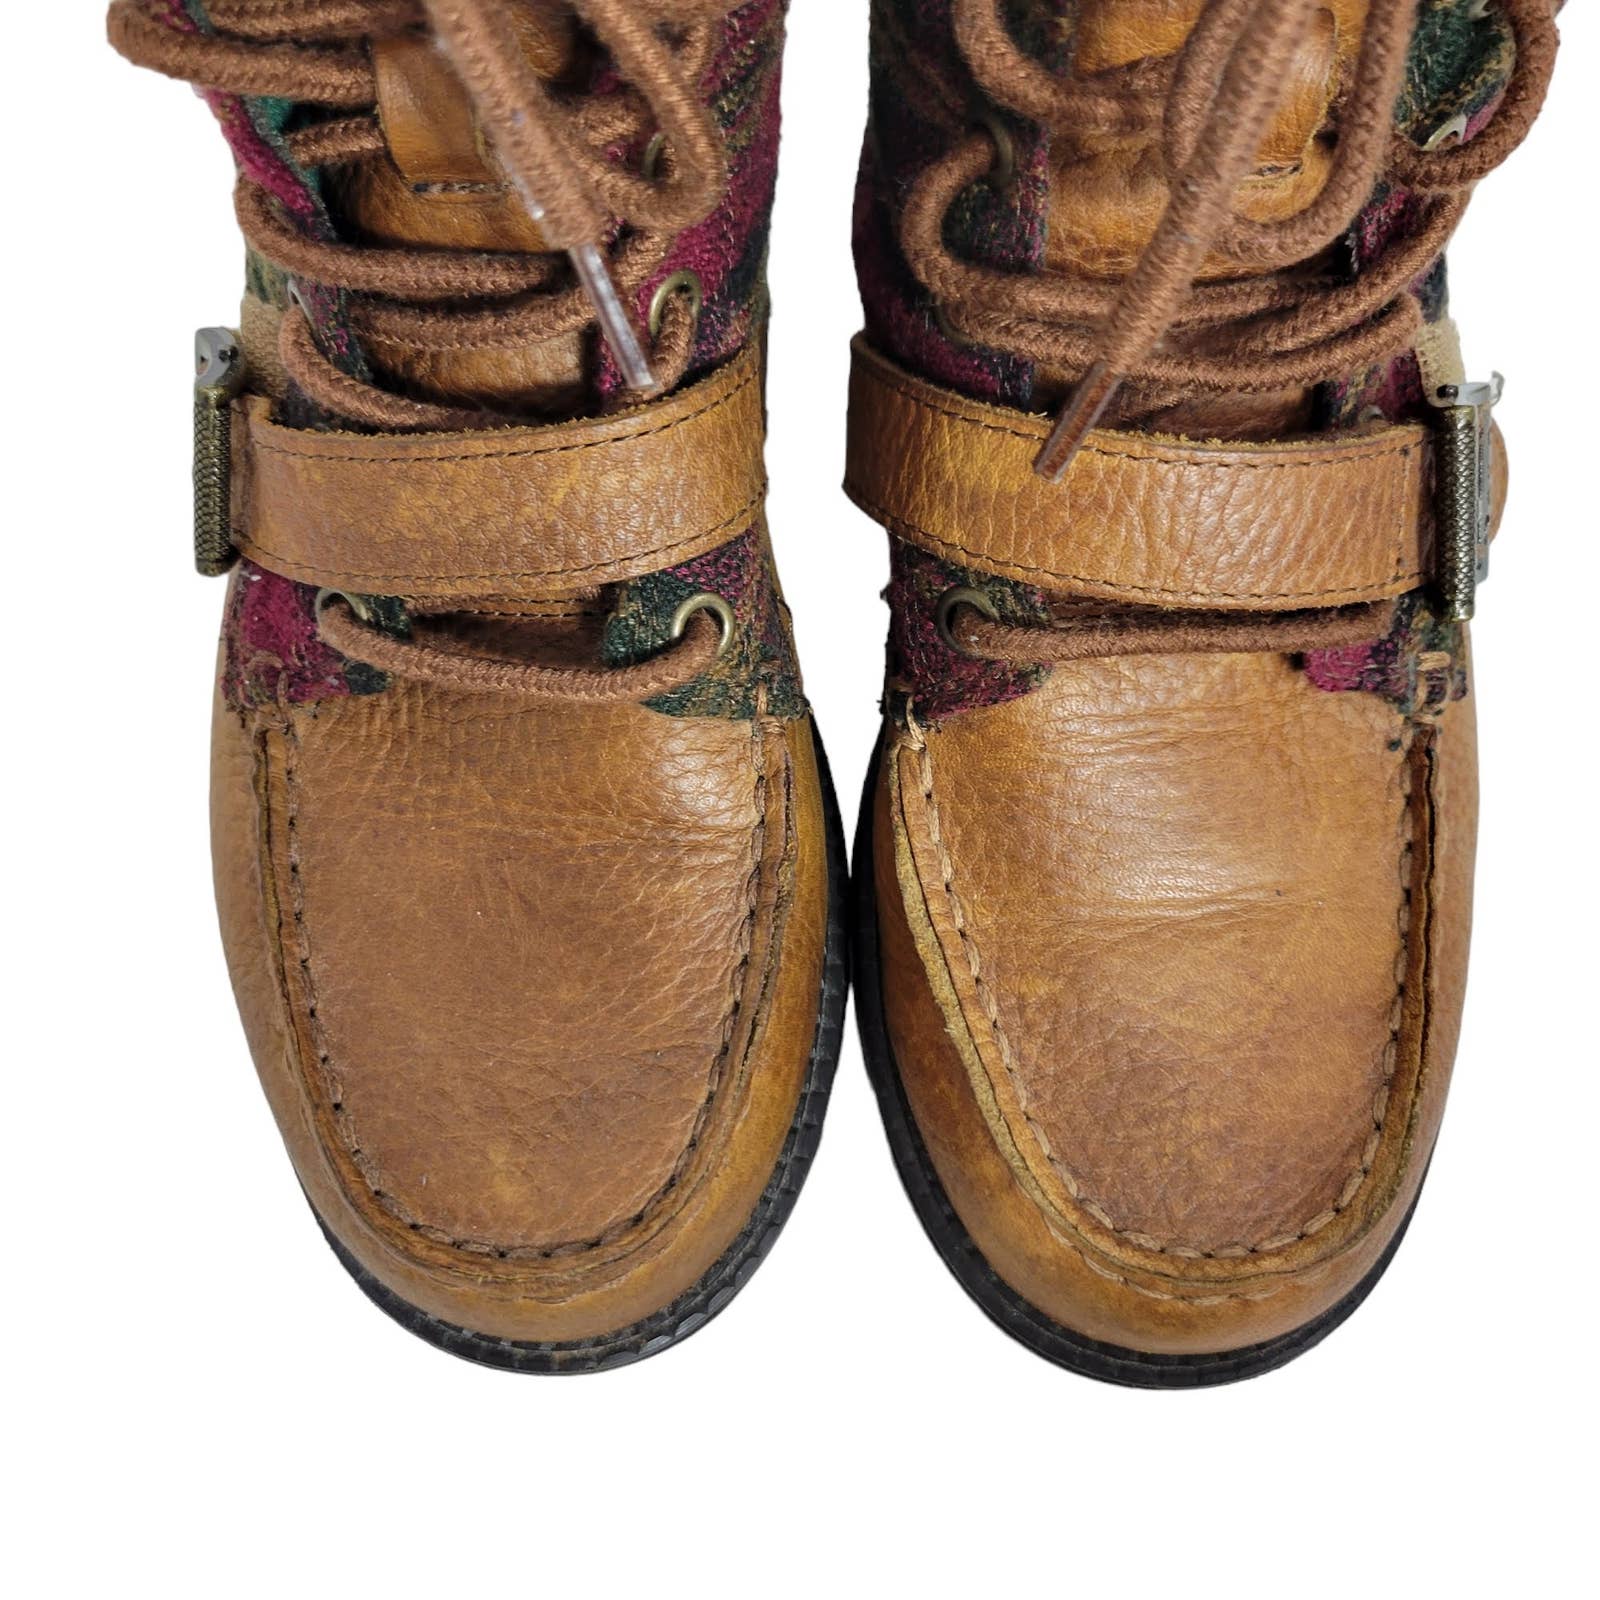 Polo Ralph Lauren Ranger II Boots Tan Leather Plaid Utility Hiking Logo Size 5 Boys